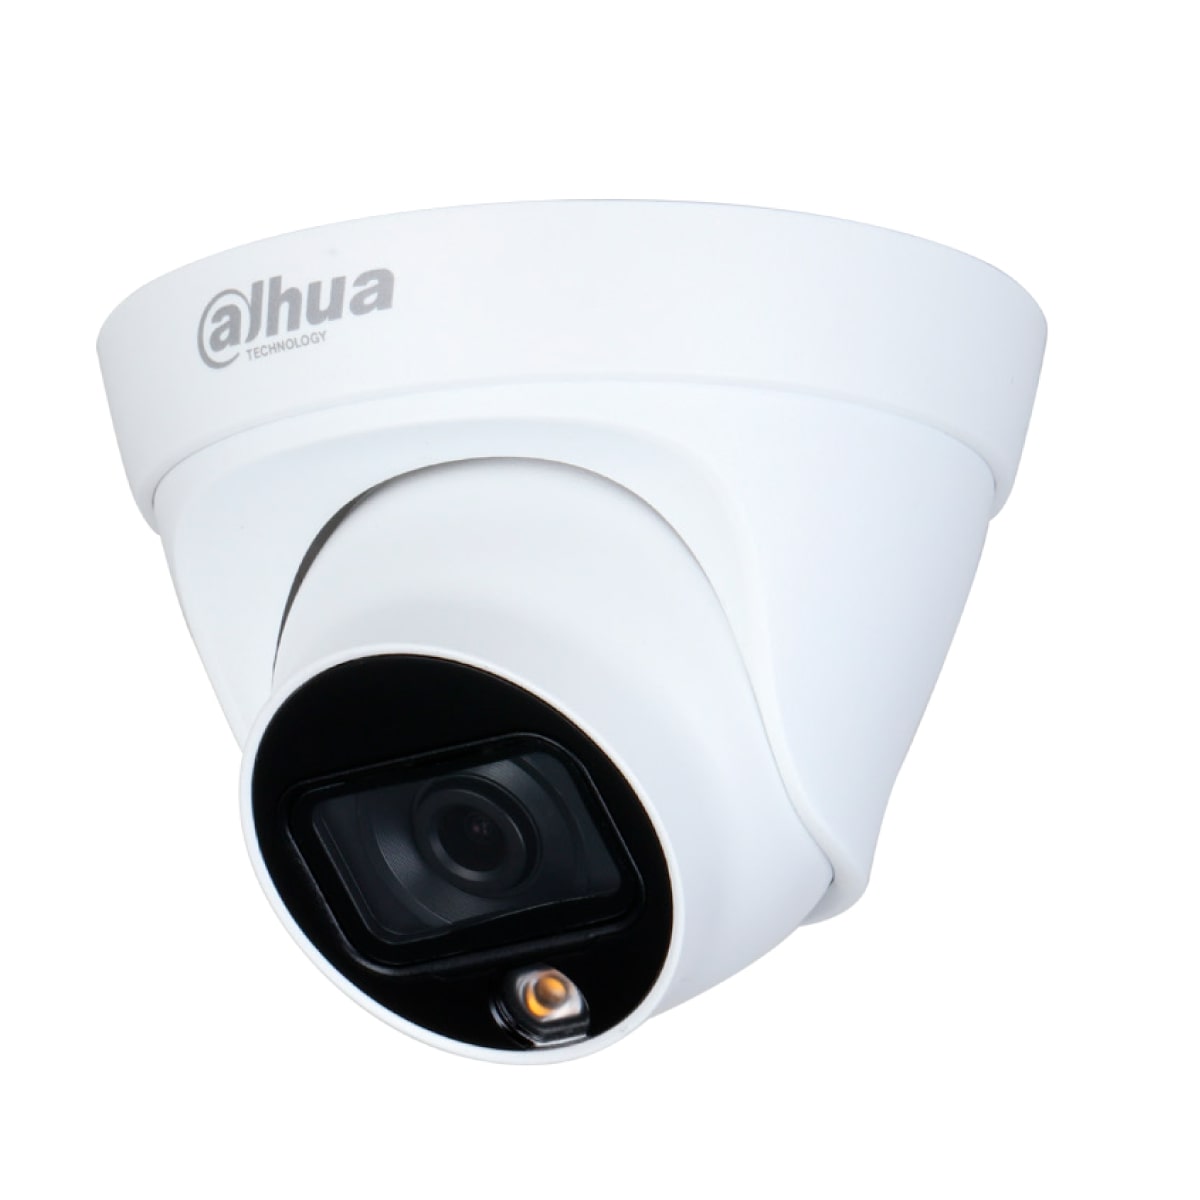 Dahua DH-IPC-HDW1239T1-LED-S5 2MP Lite Full-color Fixed-focal Eyeball Netwok Camera (2.8mm)